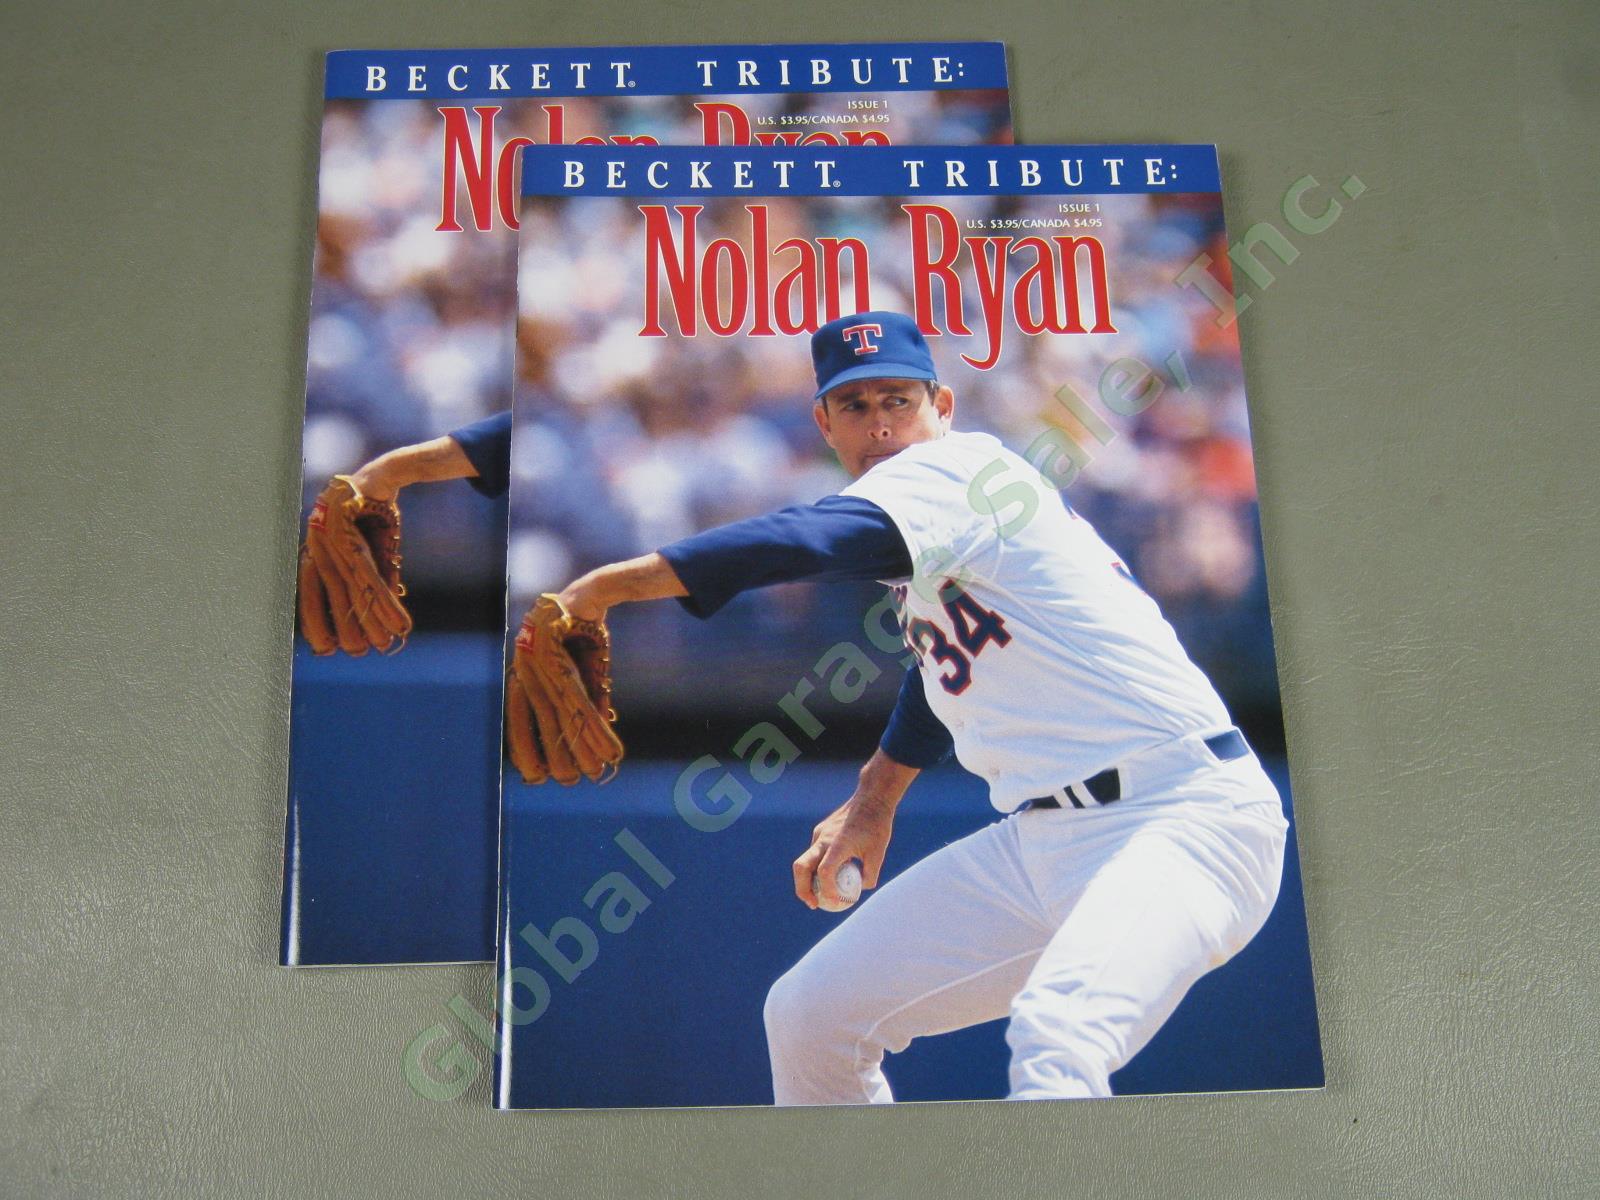 HUGE Nolan Ryan Lot Autographed Litho Reid Signed Ball 3000+/- Cards Magazines + 27